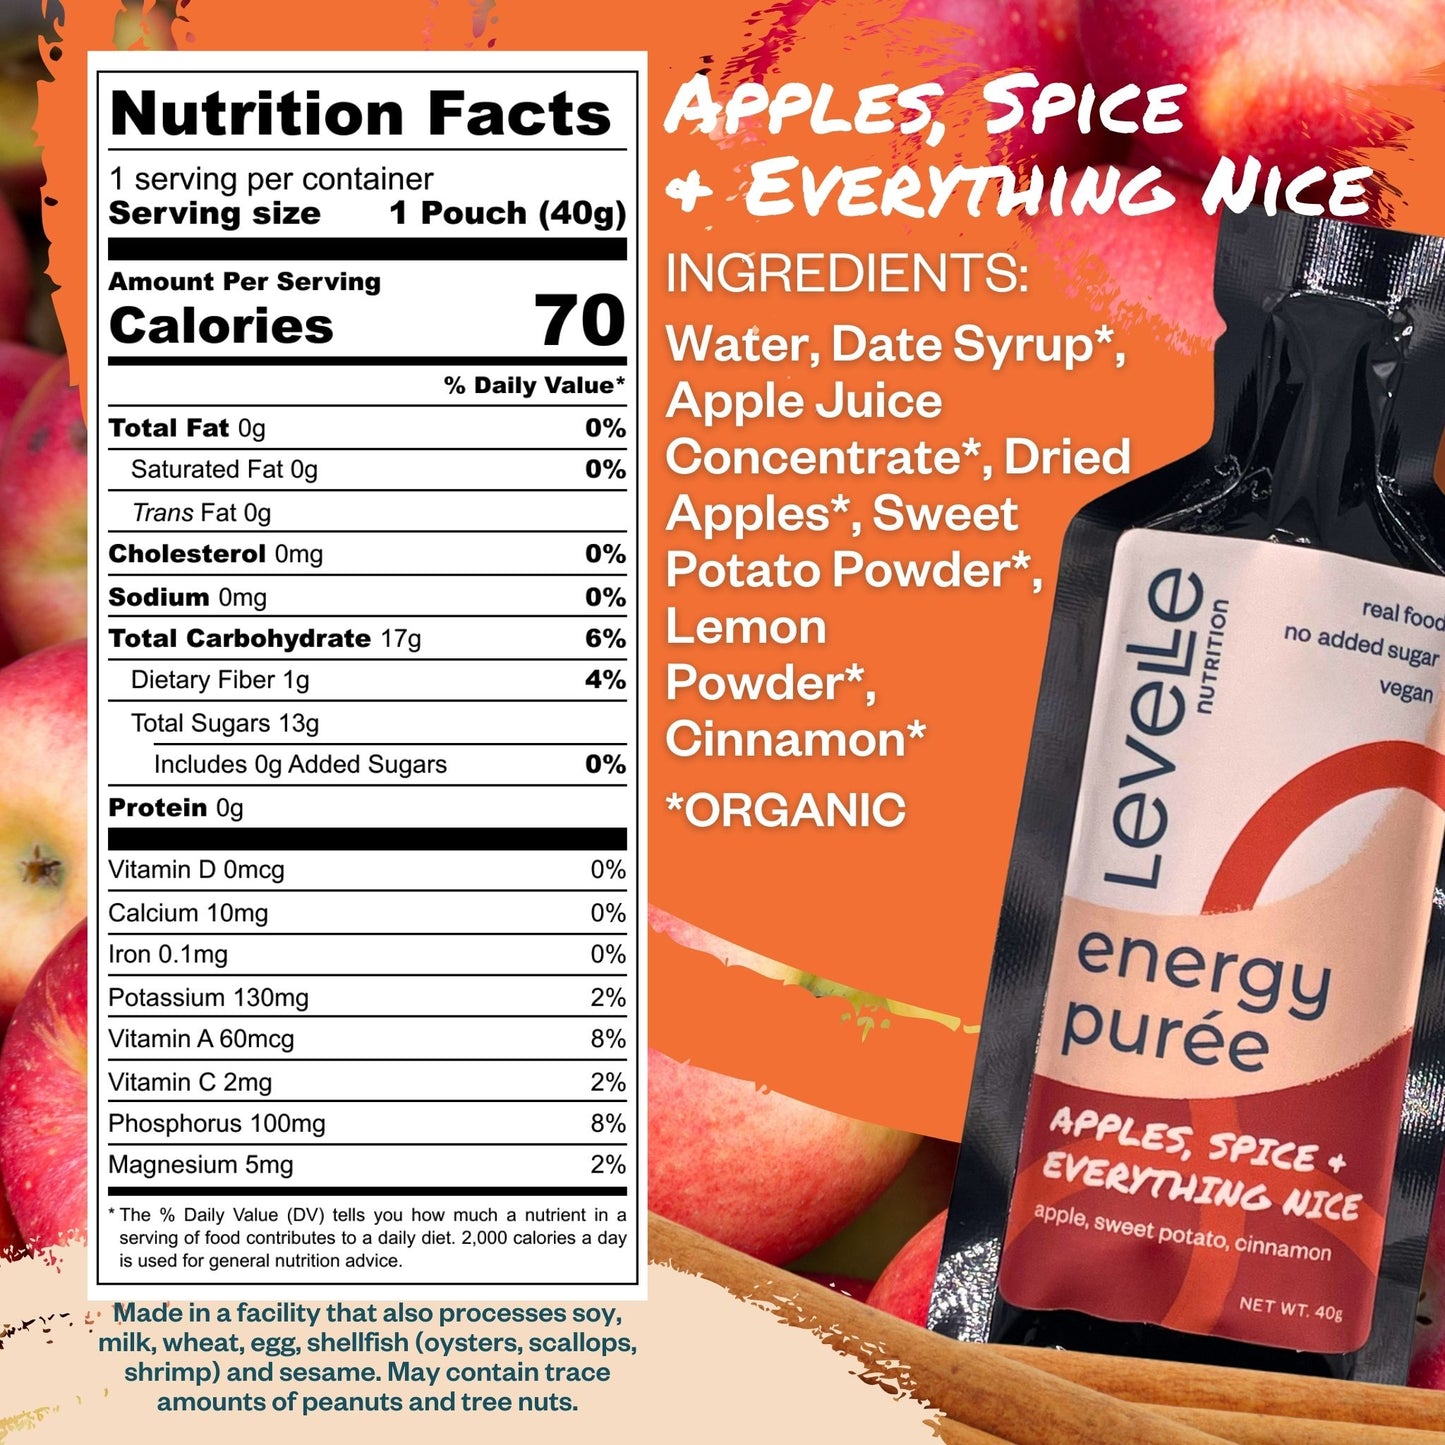 Apples, Spice & Everything Nice Energy Purée - Vegan, GI-Friendly, Real Food (40g)